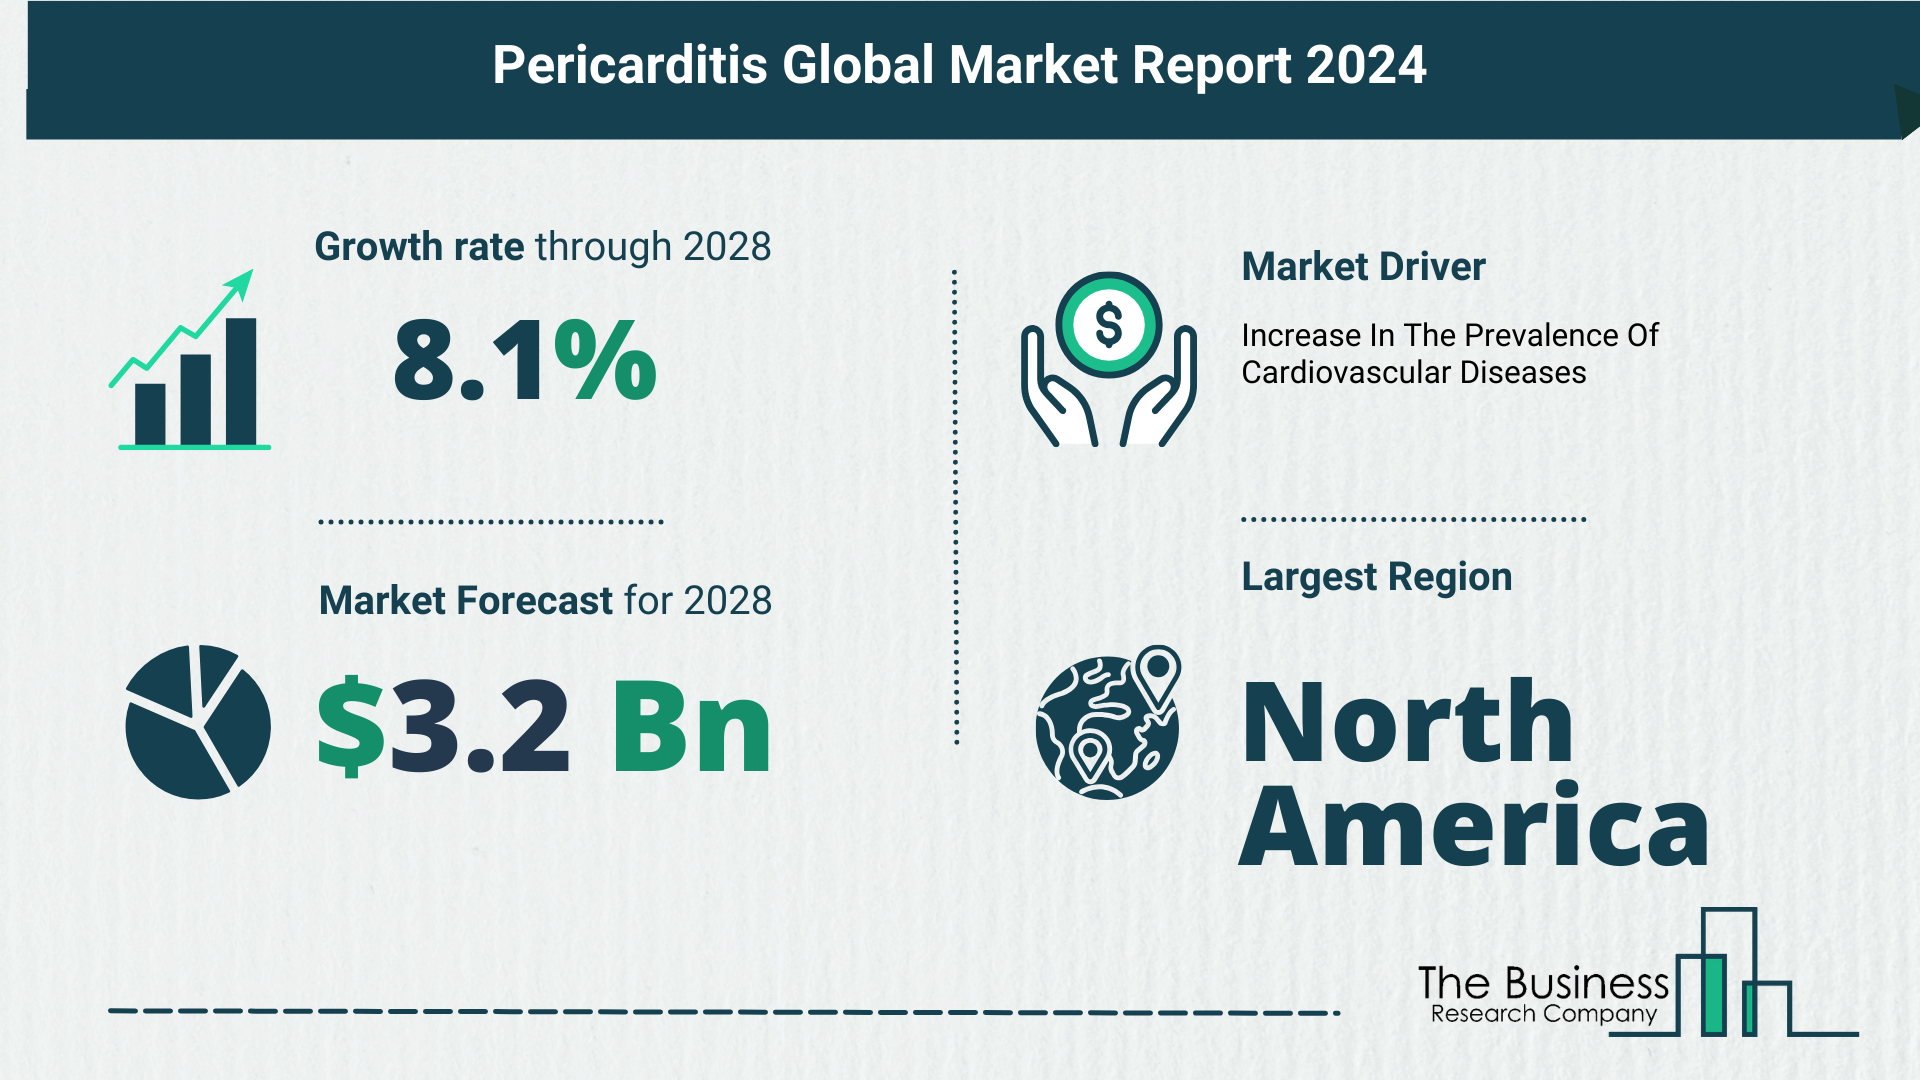 Global Pericarditis Market